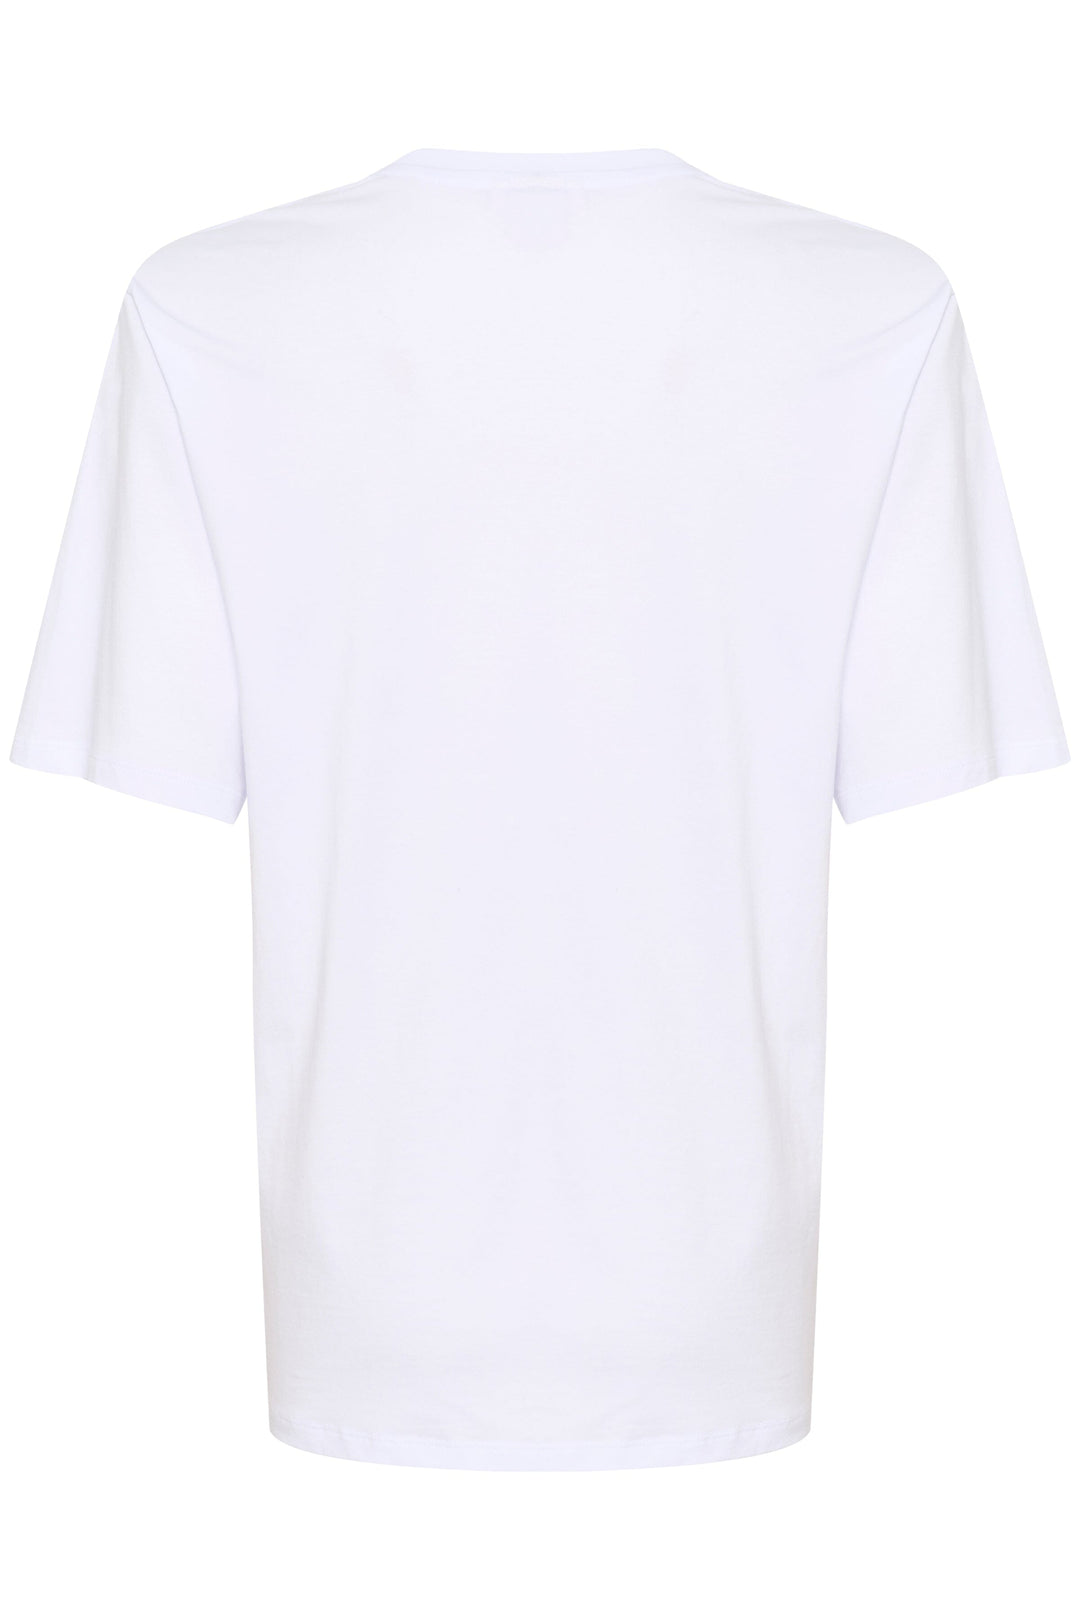 Gestuz - SamurillyGZ P tee - Bright White T-shirts 